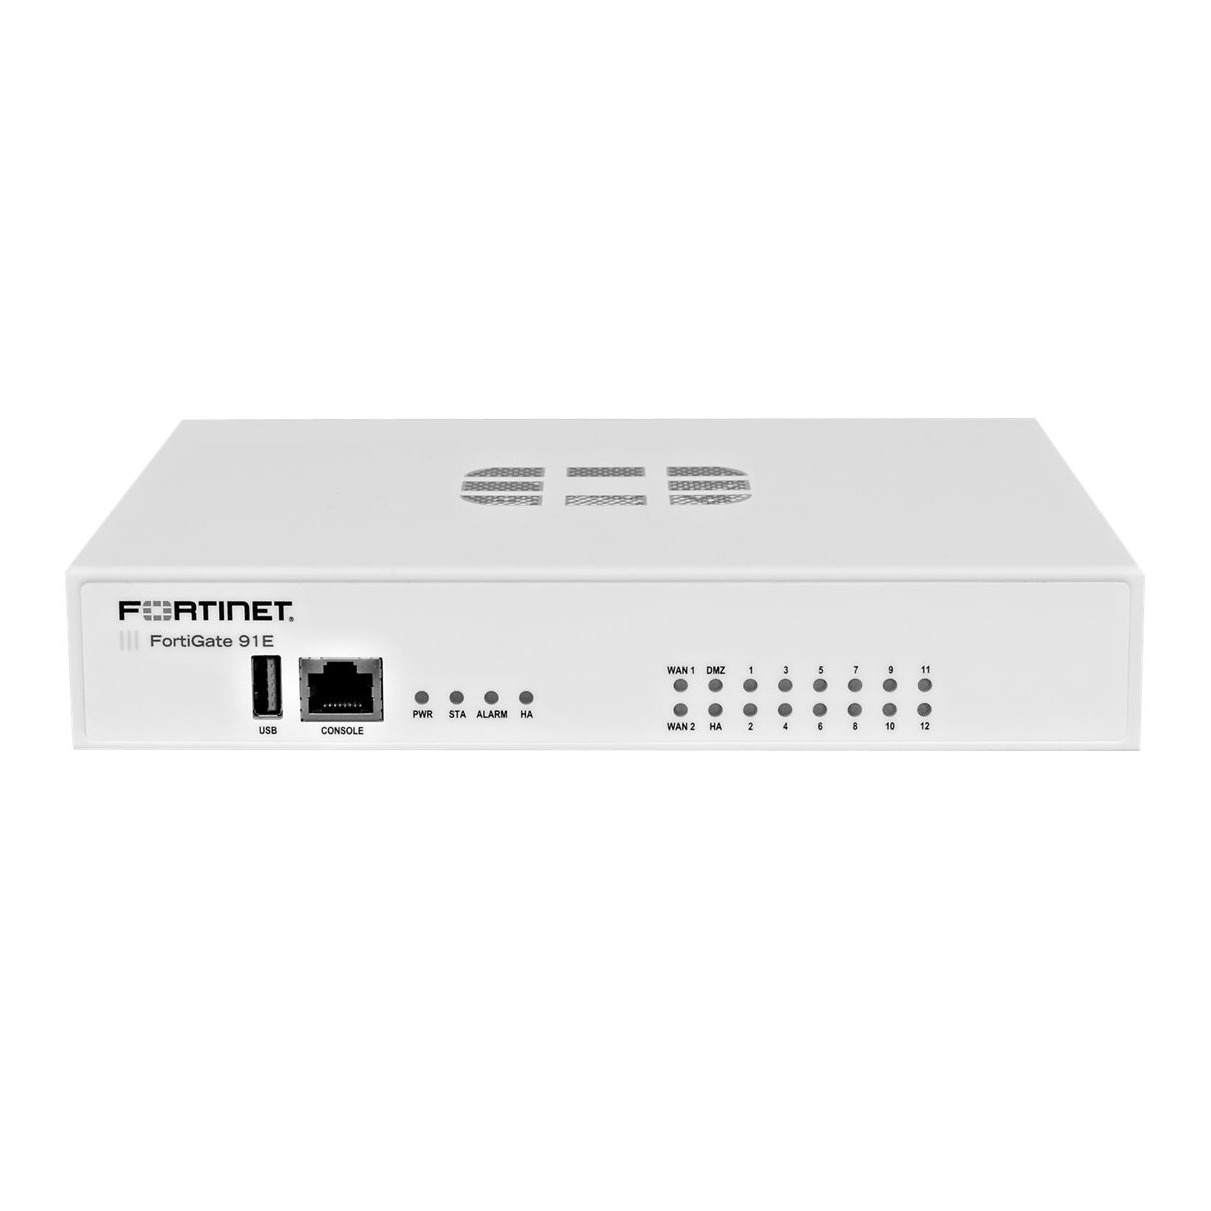 Fortinet FG-91E 16 x GE RJ45 ports (including 2 x WAN ports, 1 x DMZ port, 1 x HA port, 12 x switch ports), 